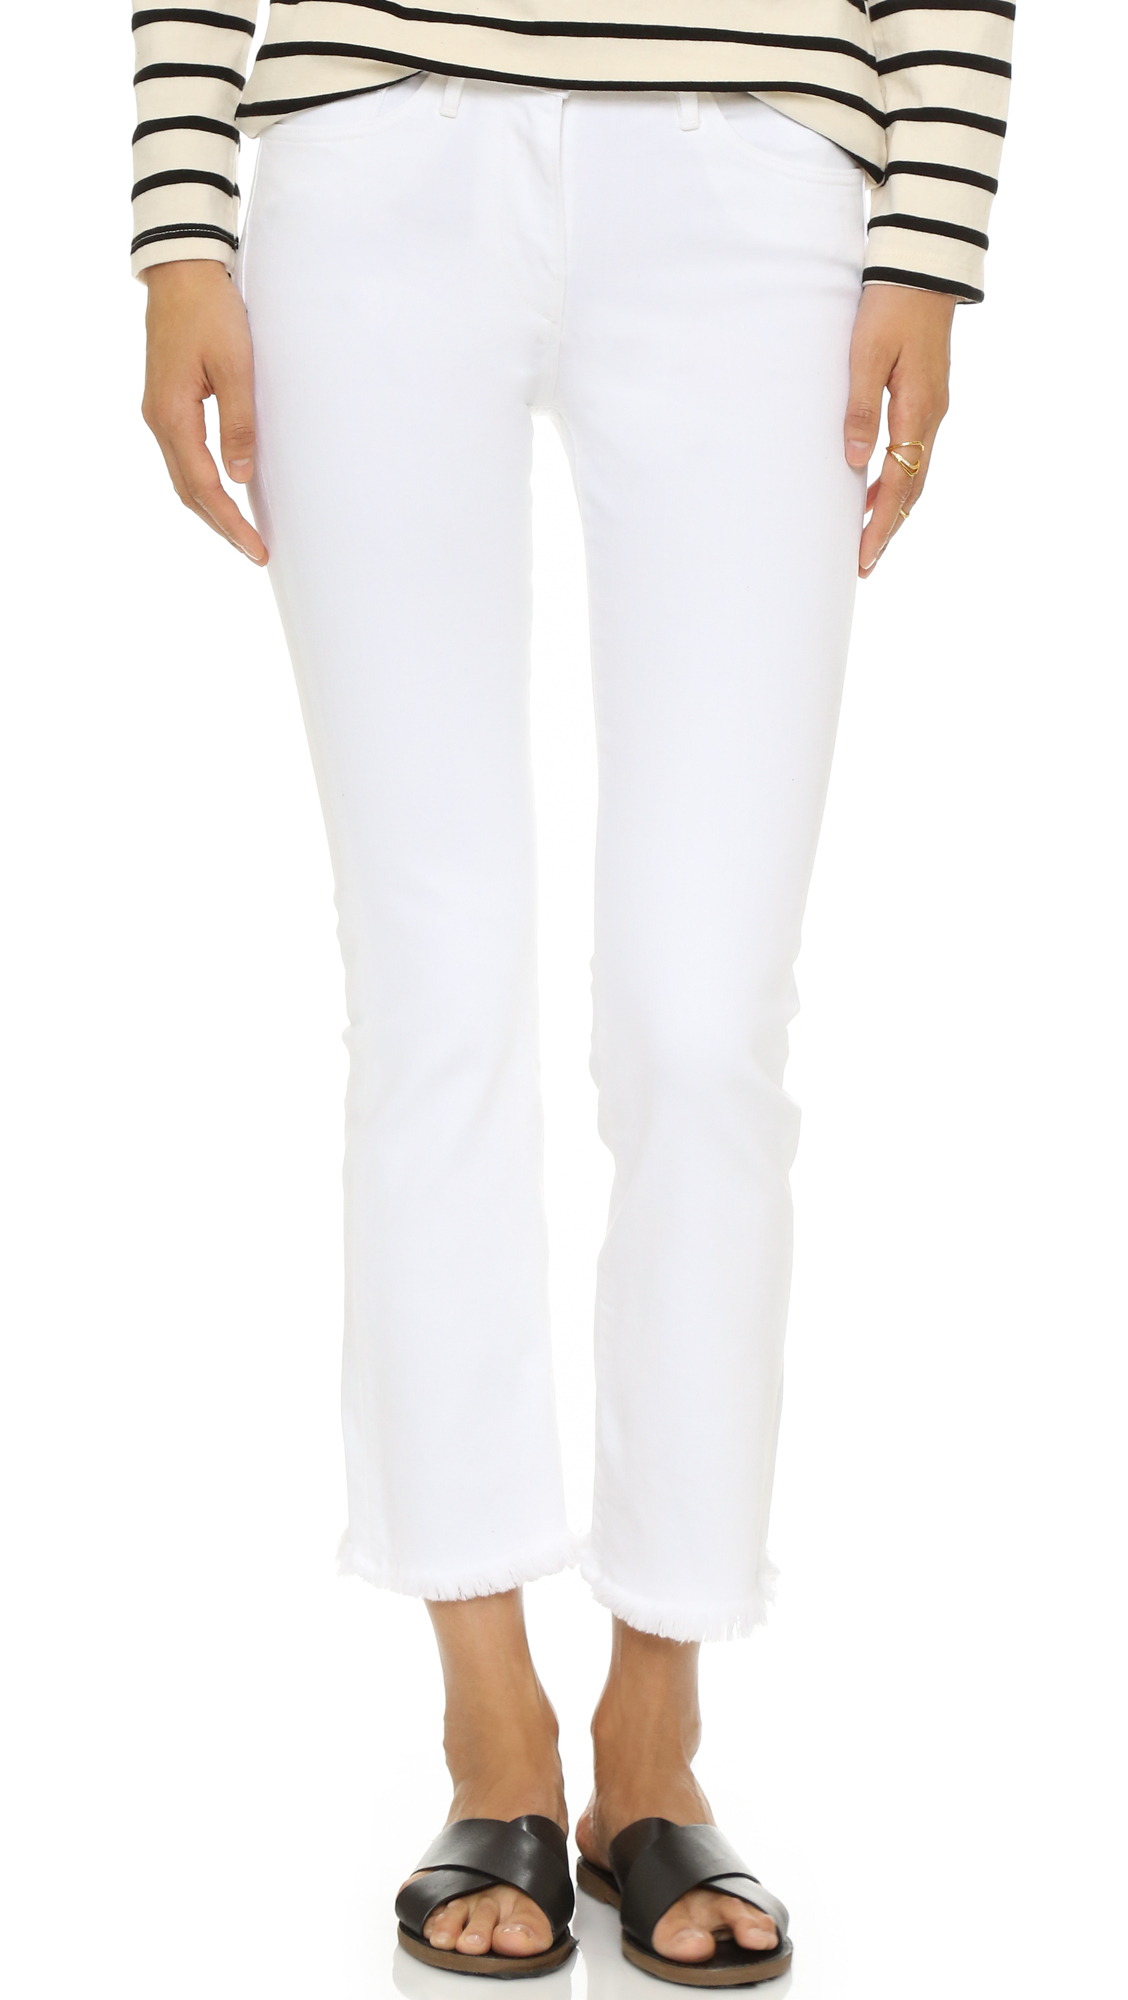 3x1 white jeans